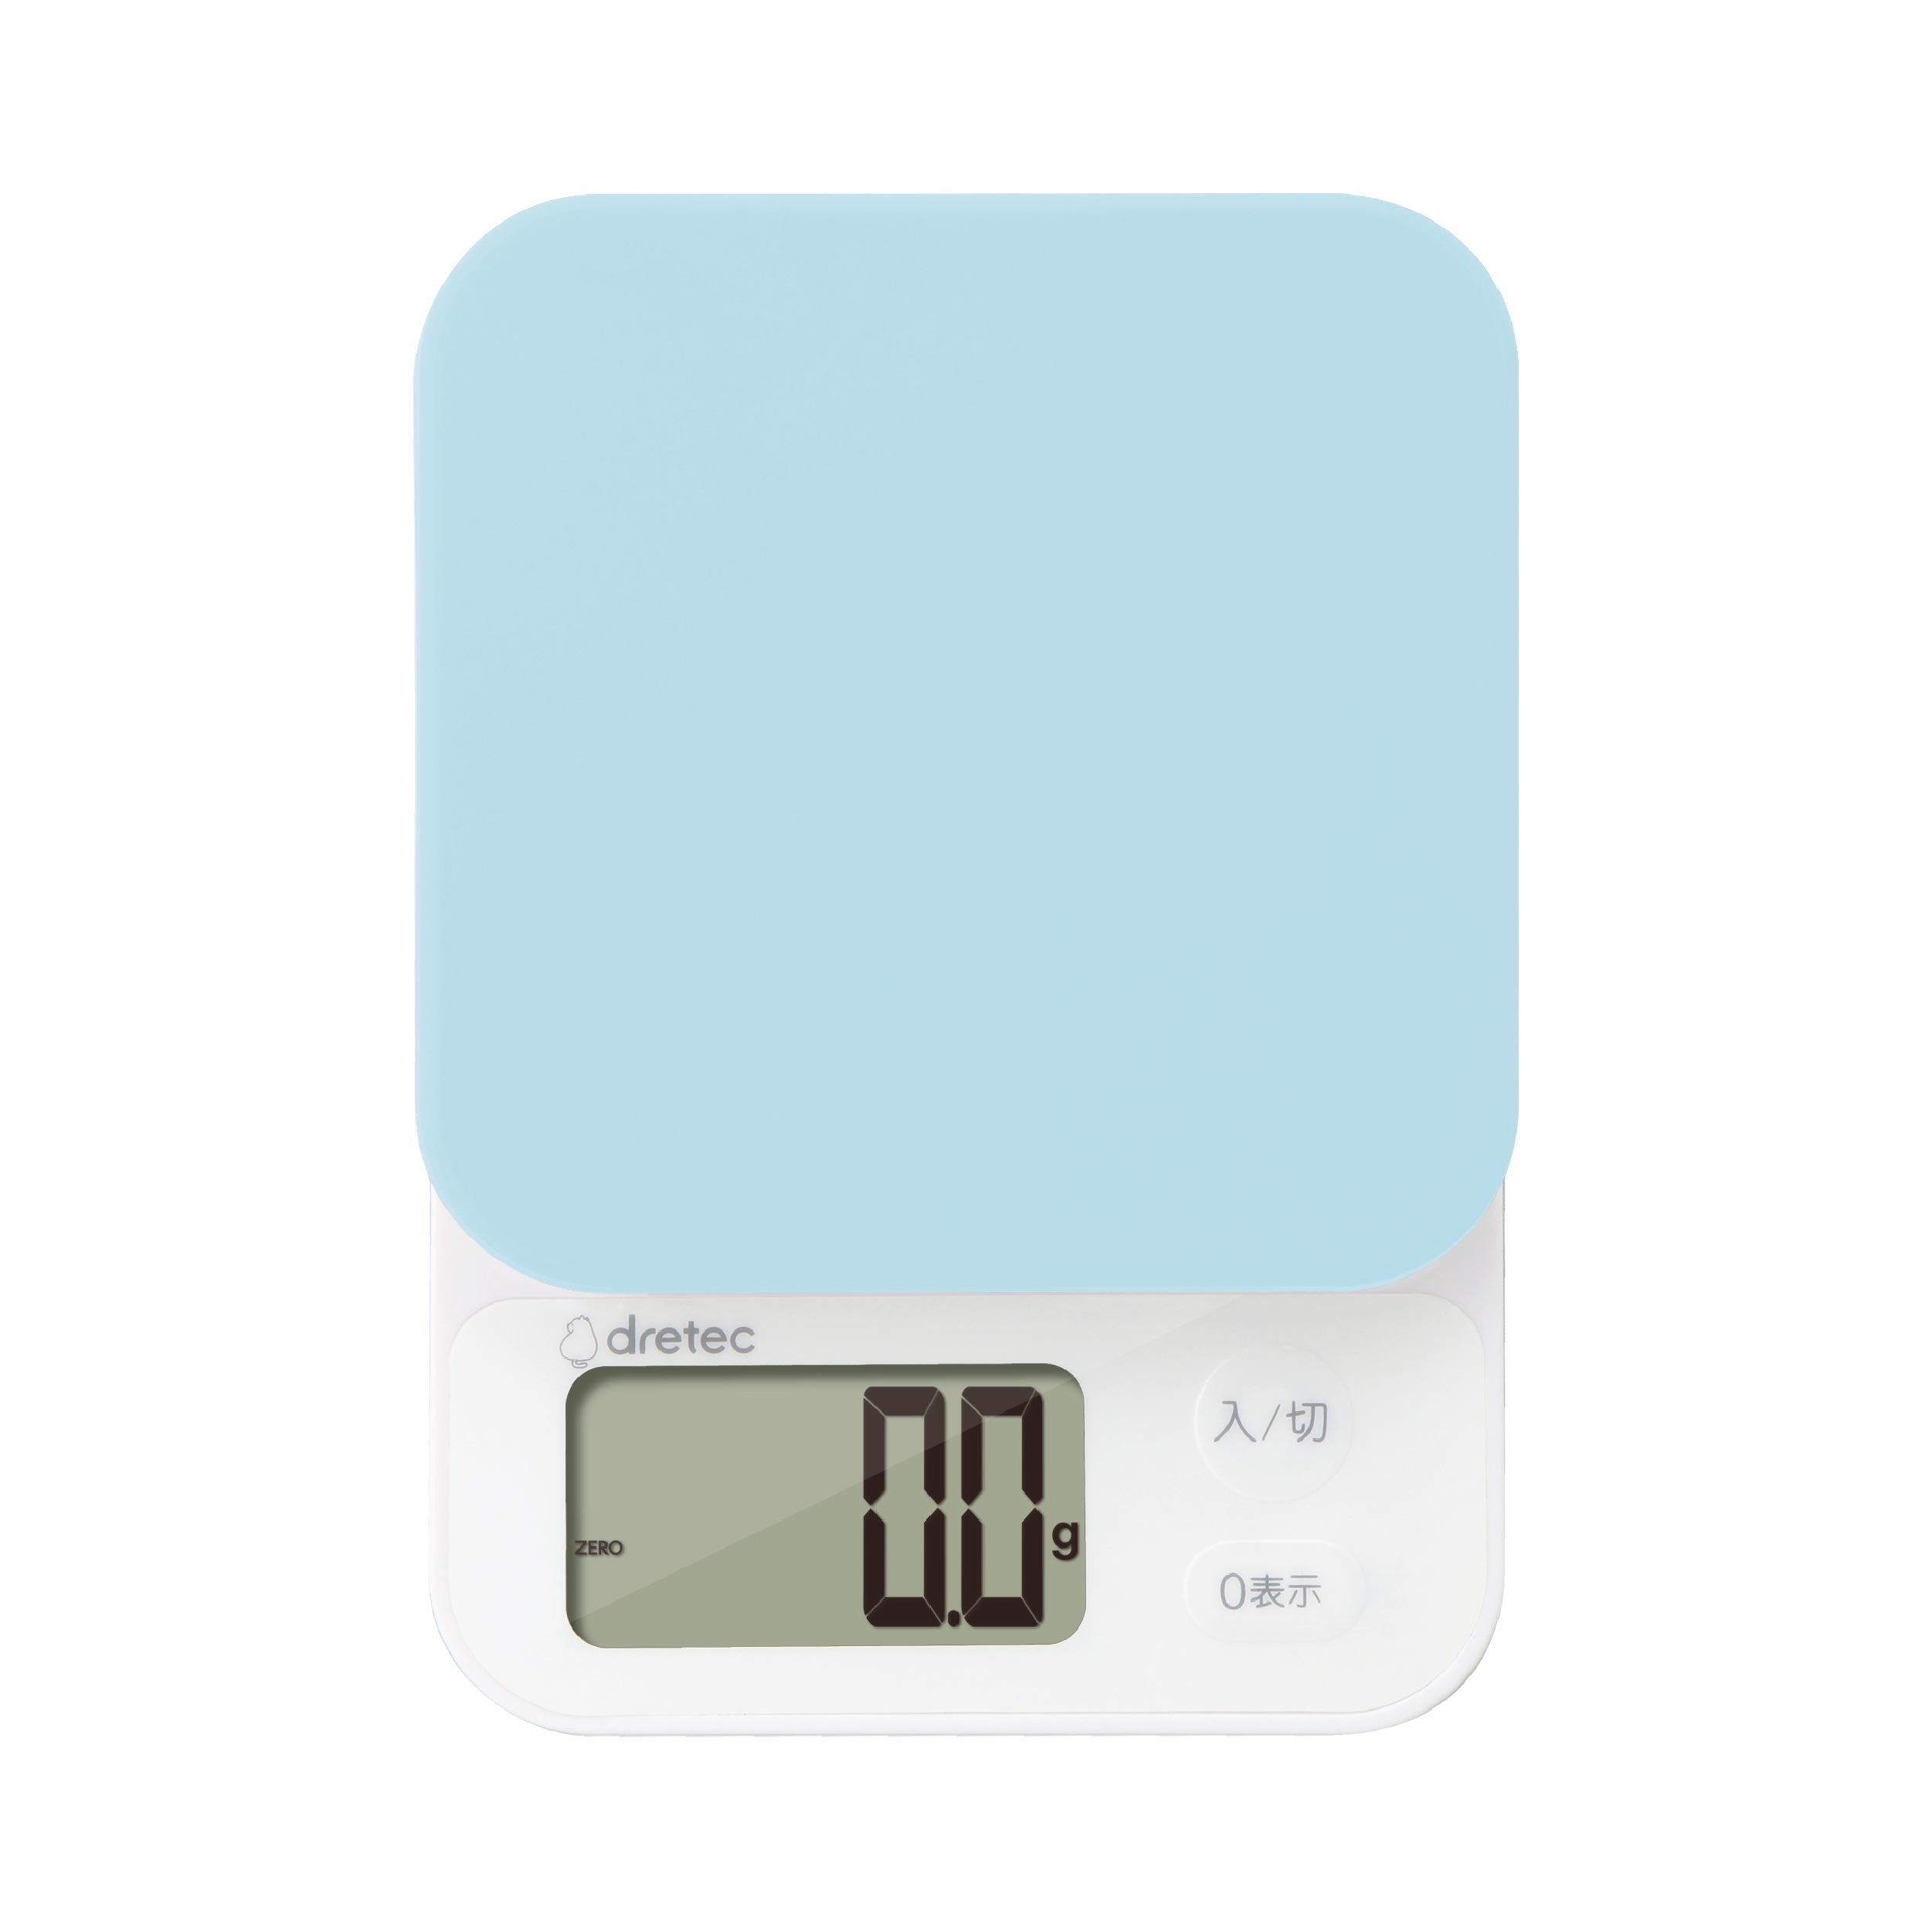 Dretec Precision Digital Scale (0.1g-2kg) in Blue – Cote Maison Asia